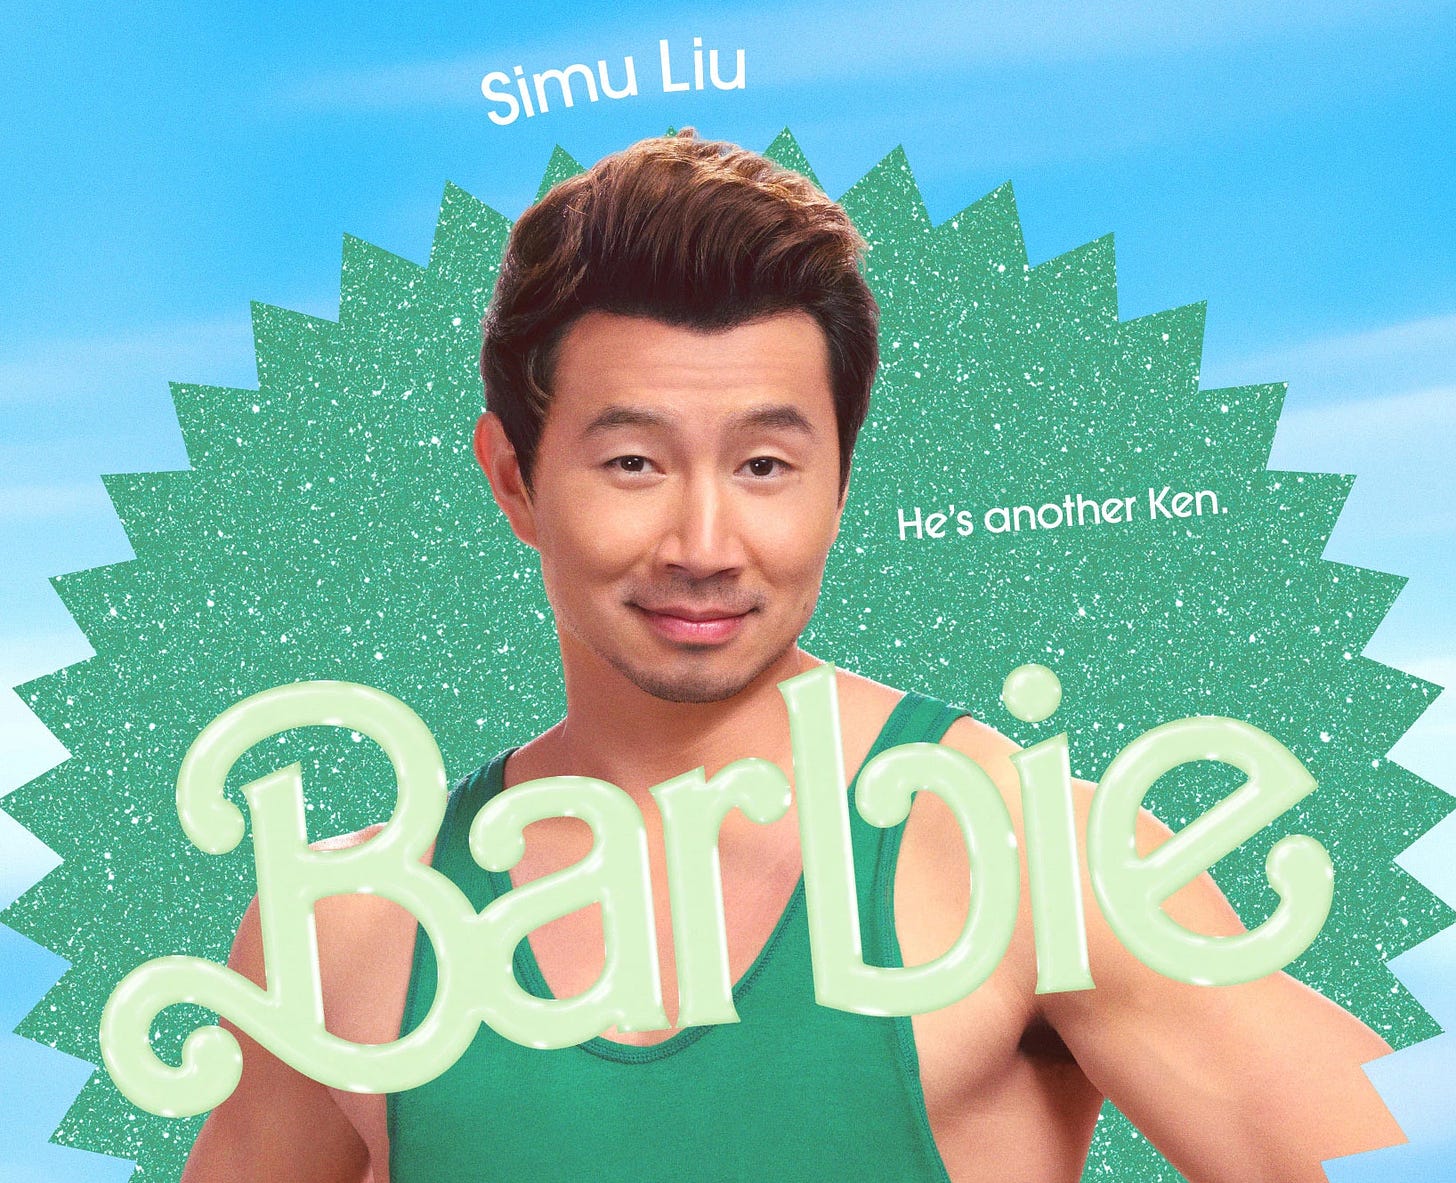 Barbie promo photo of Simu Liu as "another Ken"